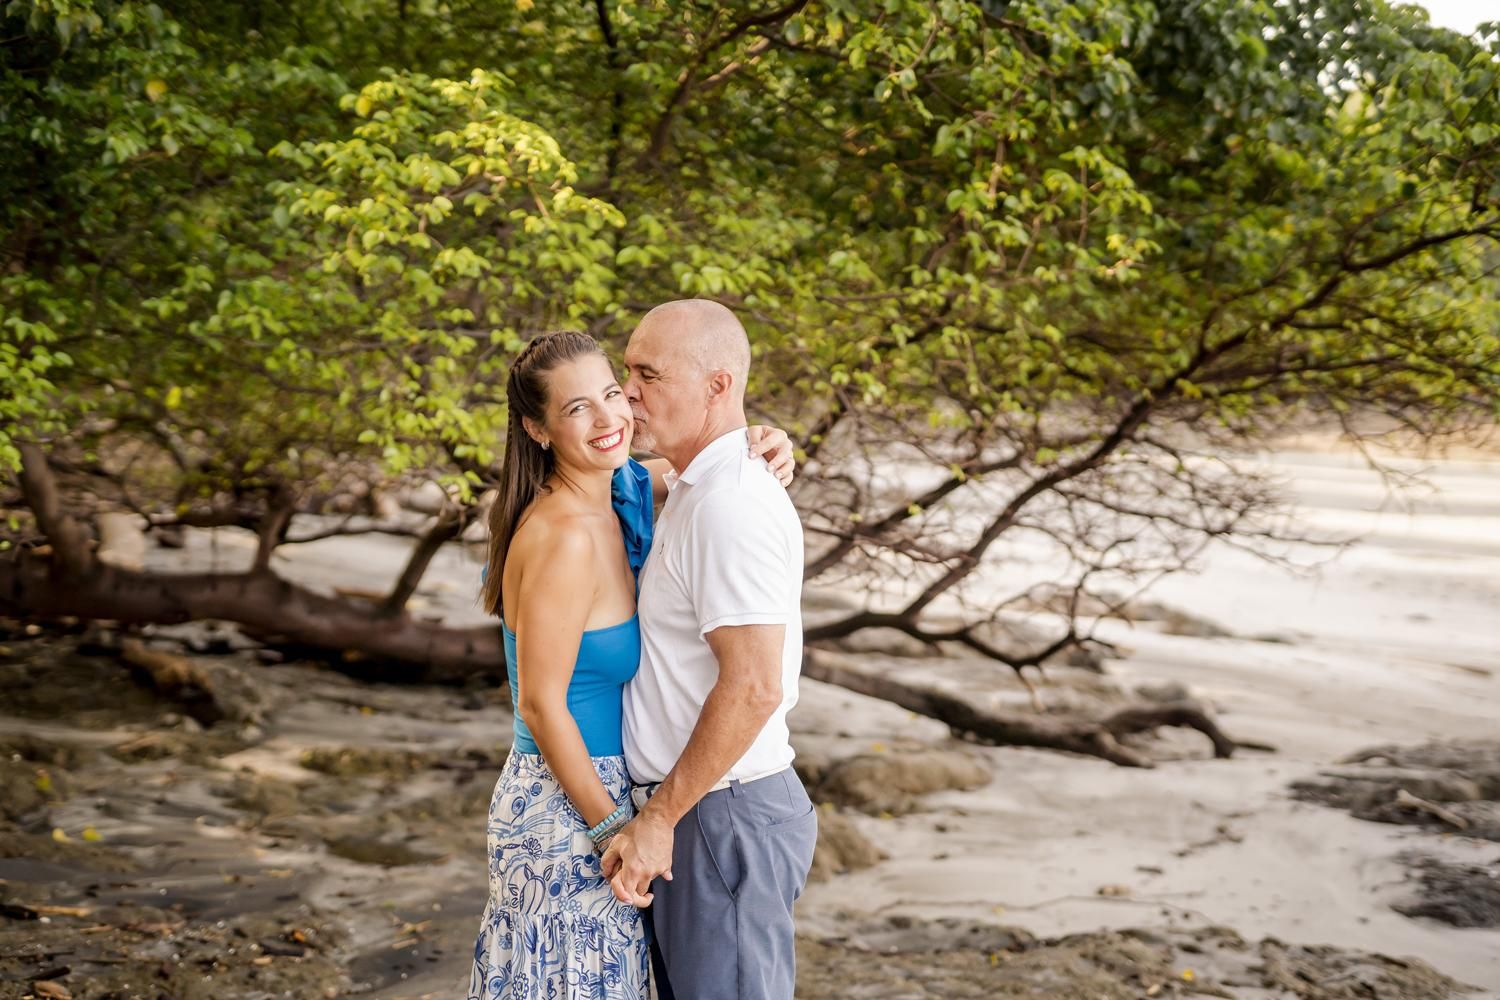 Alexandra and her husband, Bill In Costa Rica